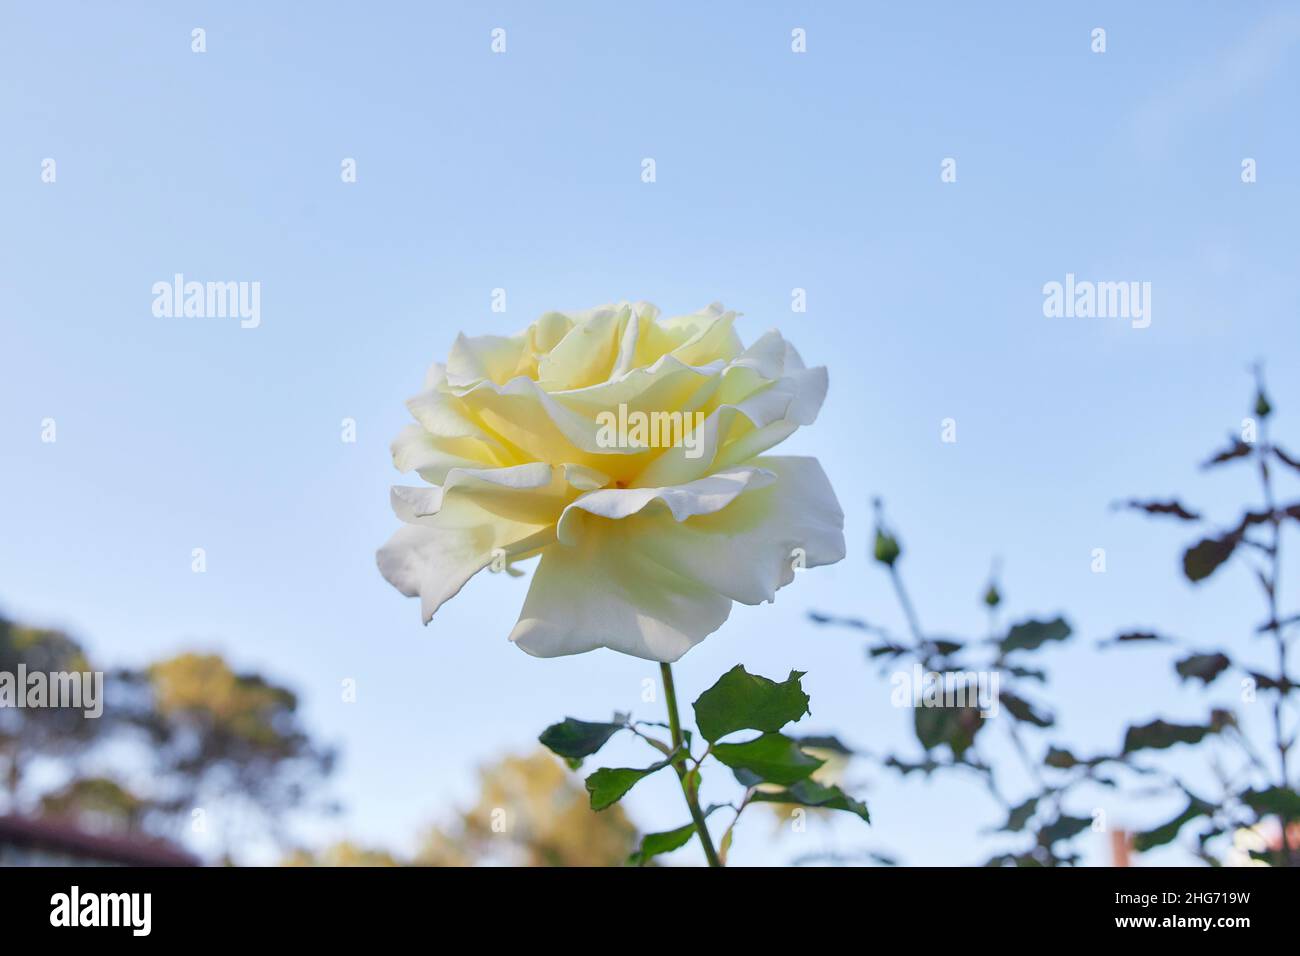 Fresh white rose flower blooming in a garden Stock Photo